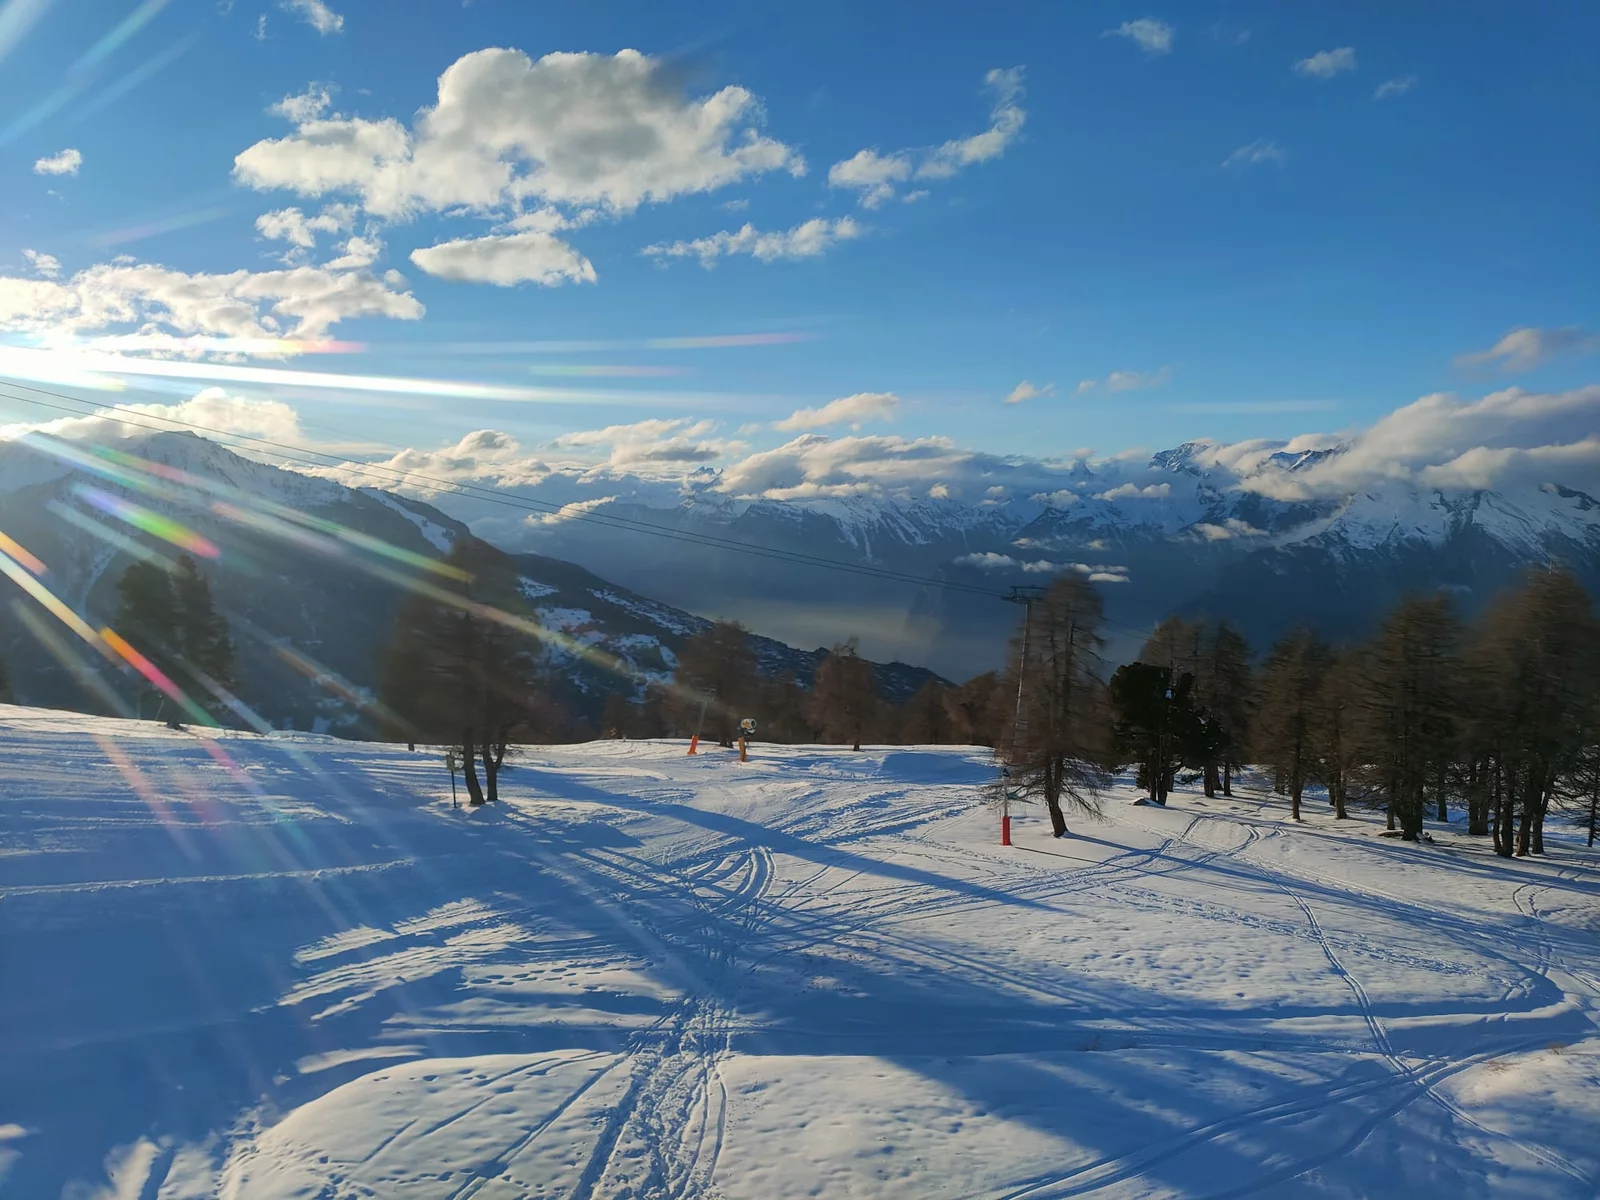 Swiss winter resort